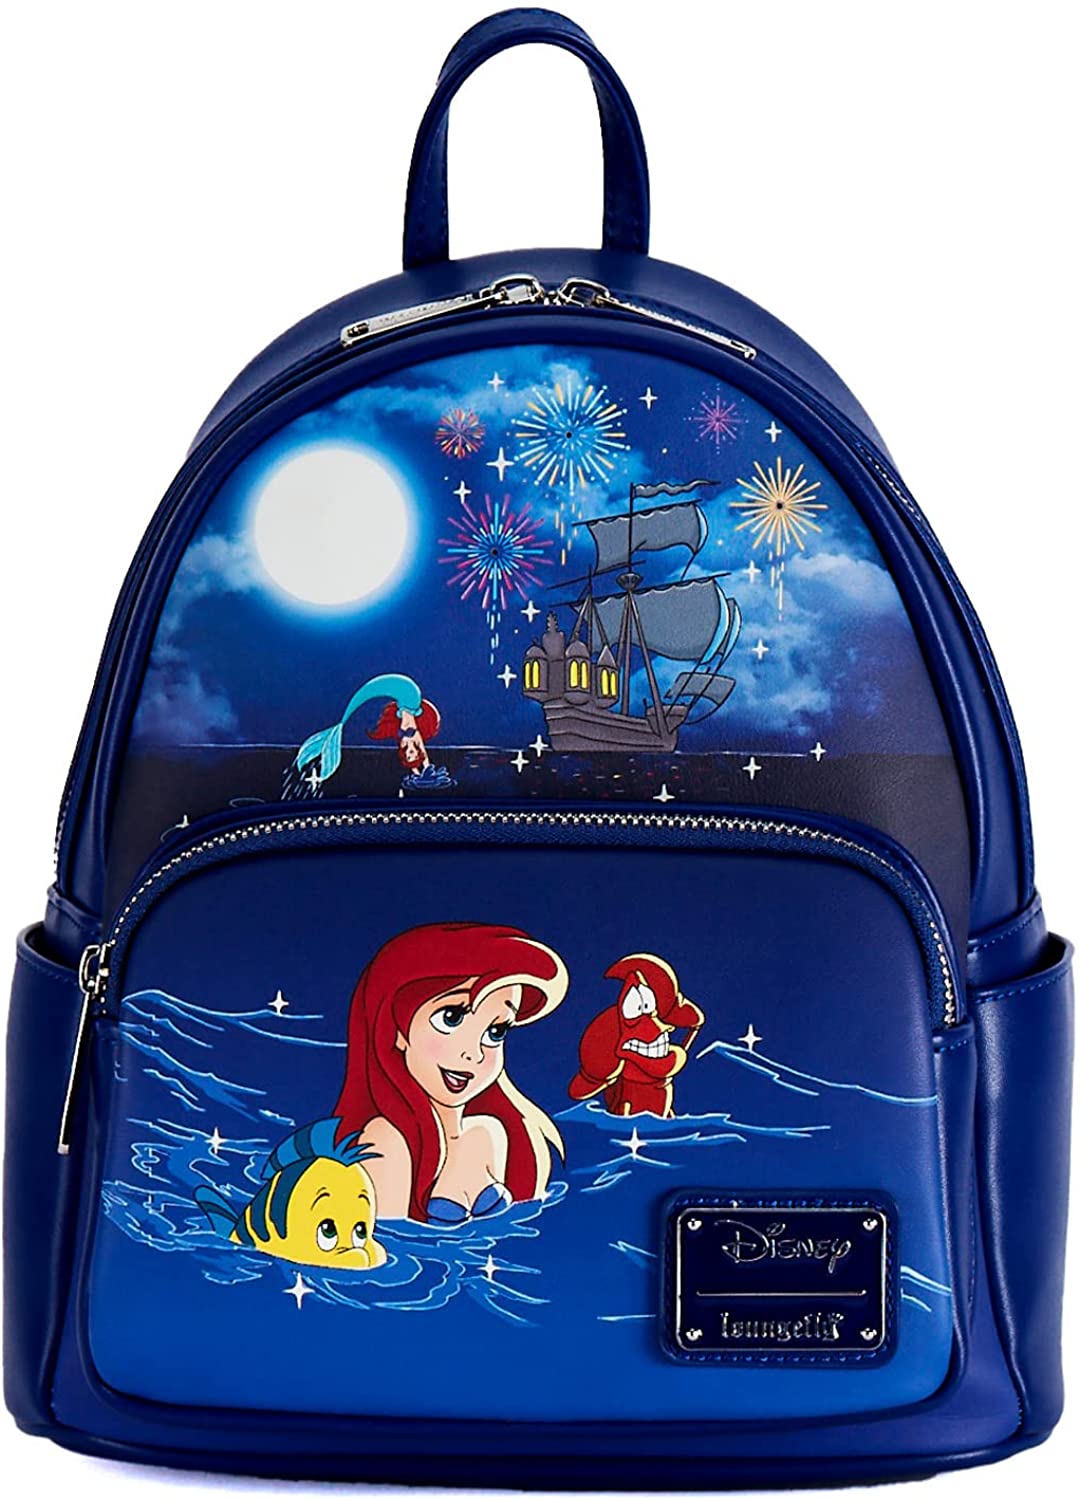 Loungefly Disney Die kleine Meerjungfrau Arielle, Feuerwerk, beleuchteter Mini-Rucksack